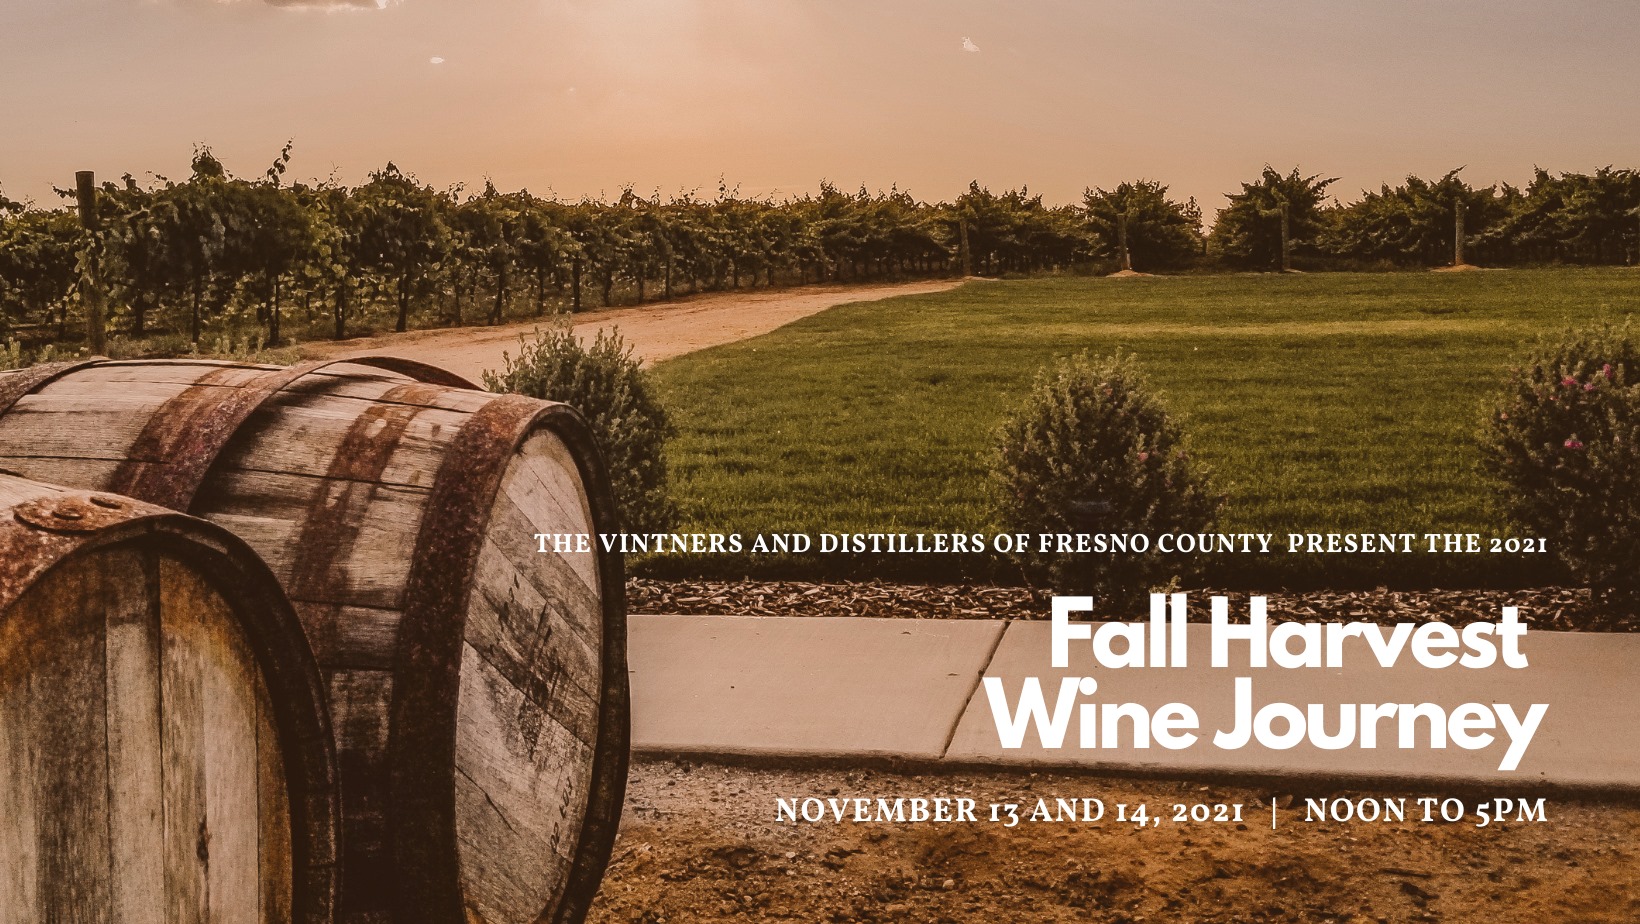 Fresno County Wine Journey event